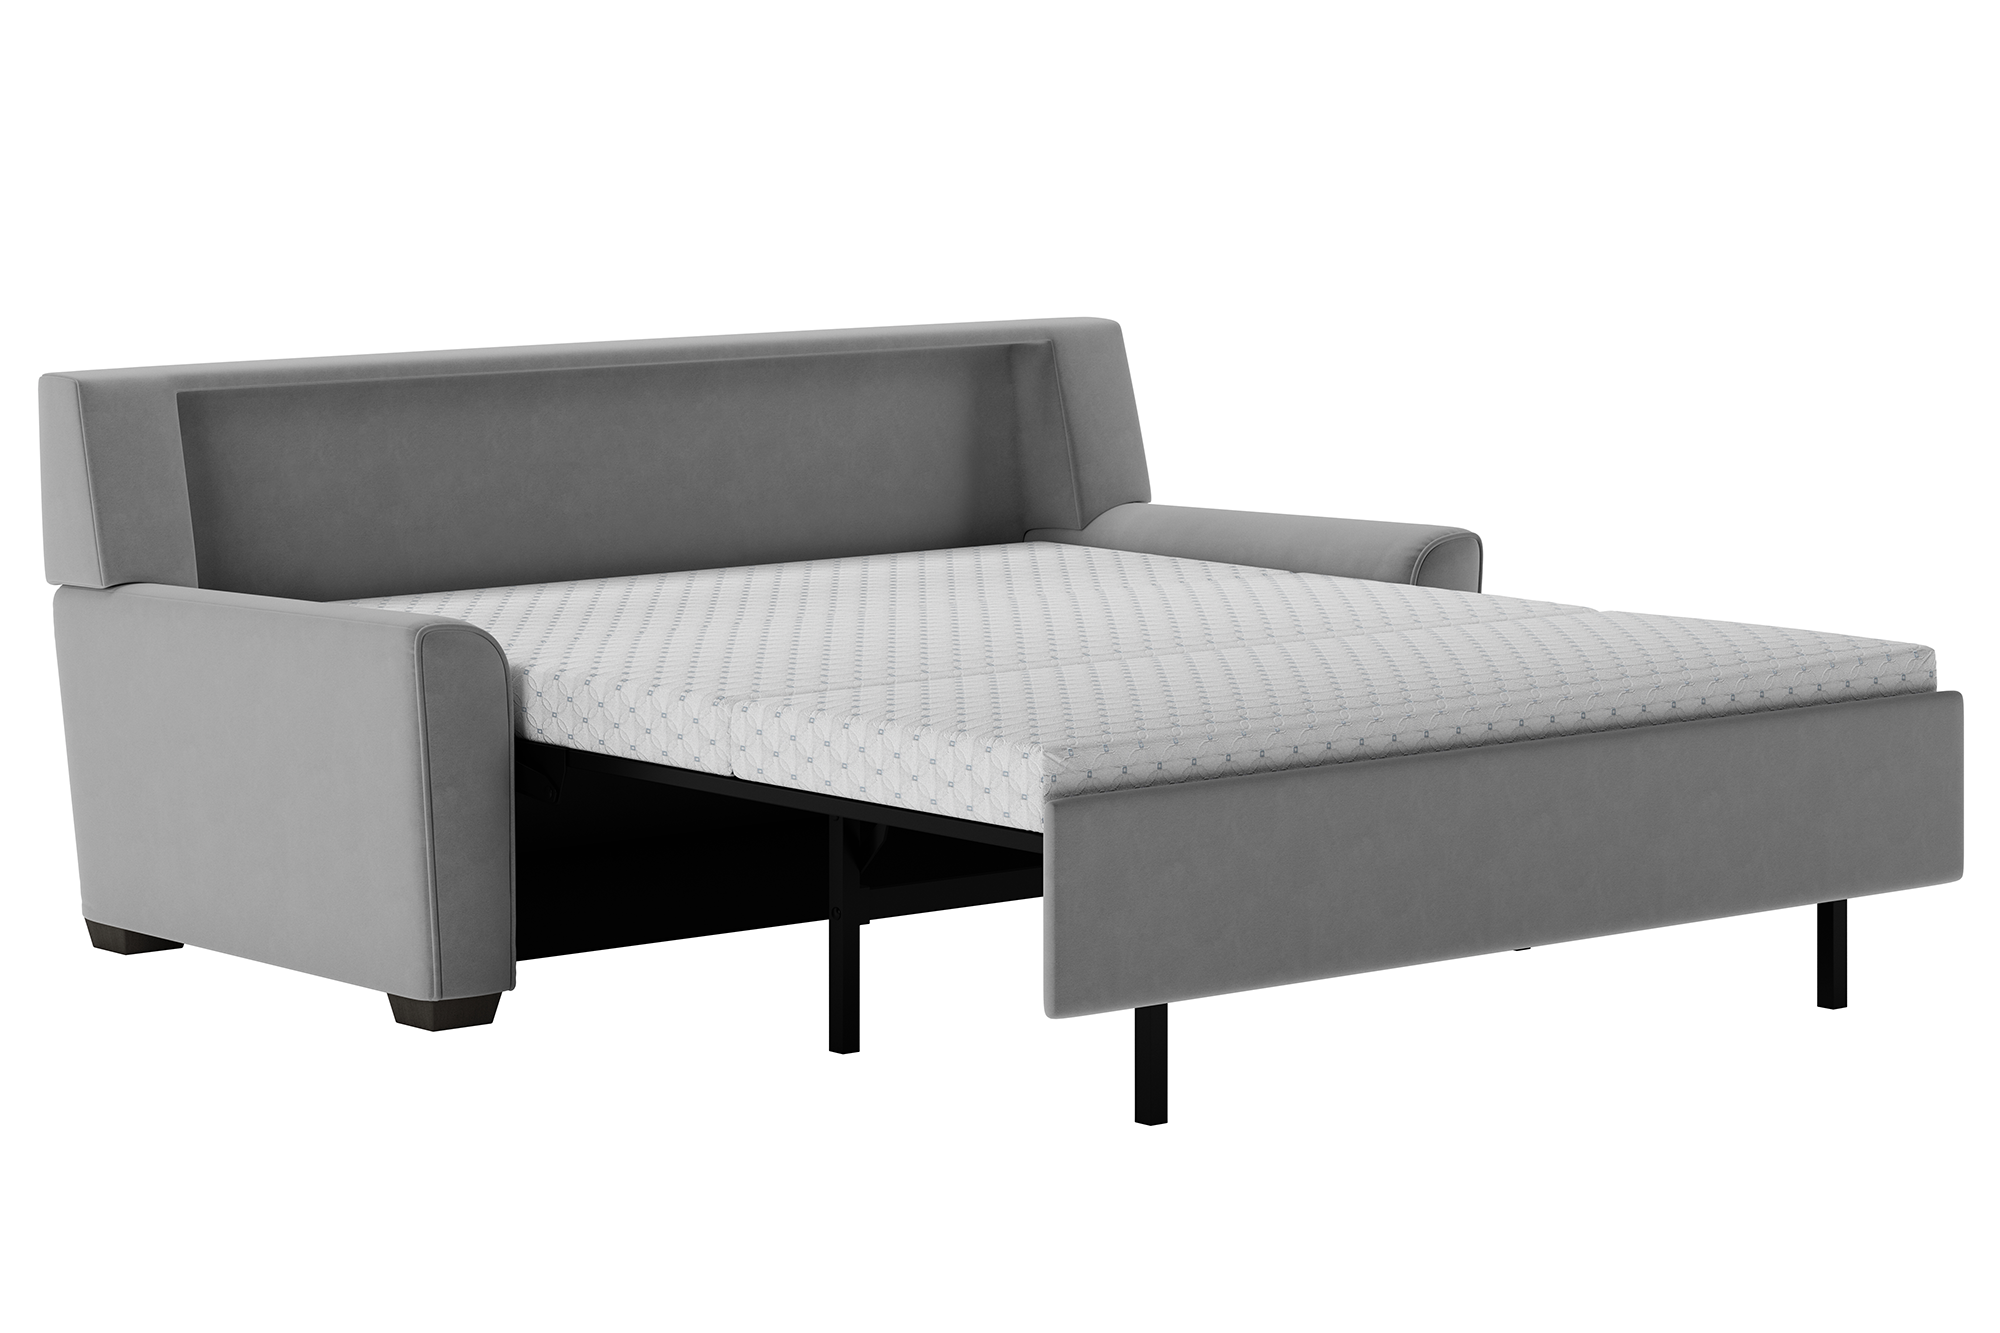 Klein Comfort Sleeper Sofa